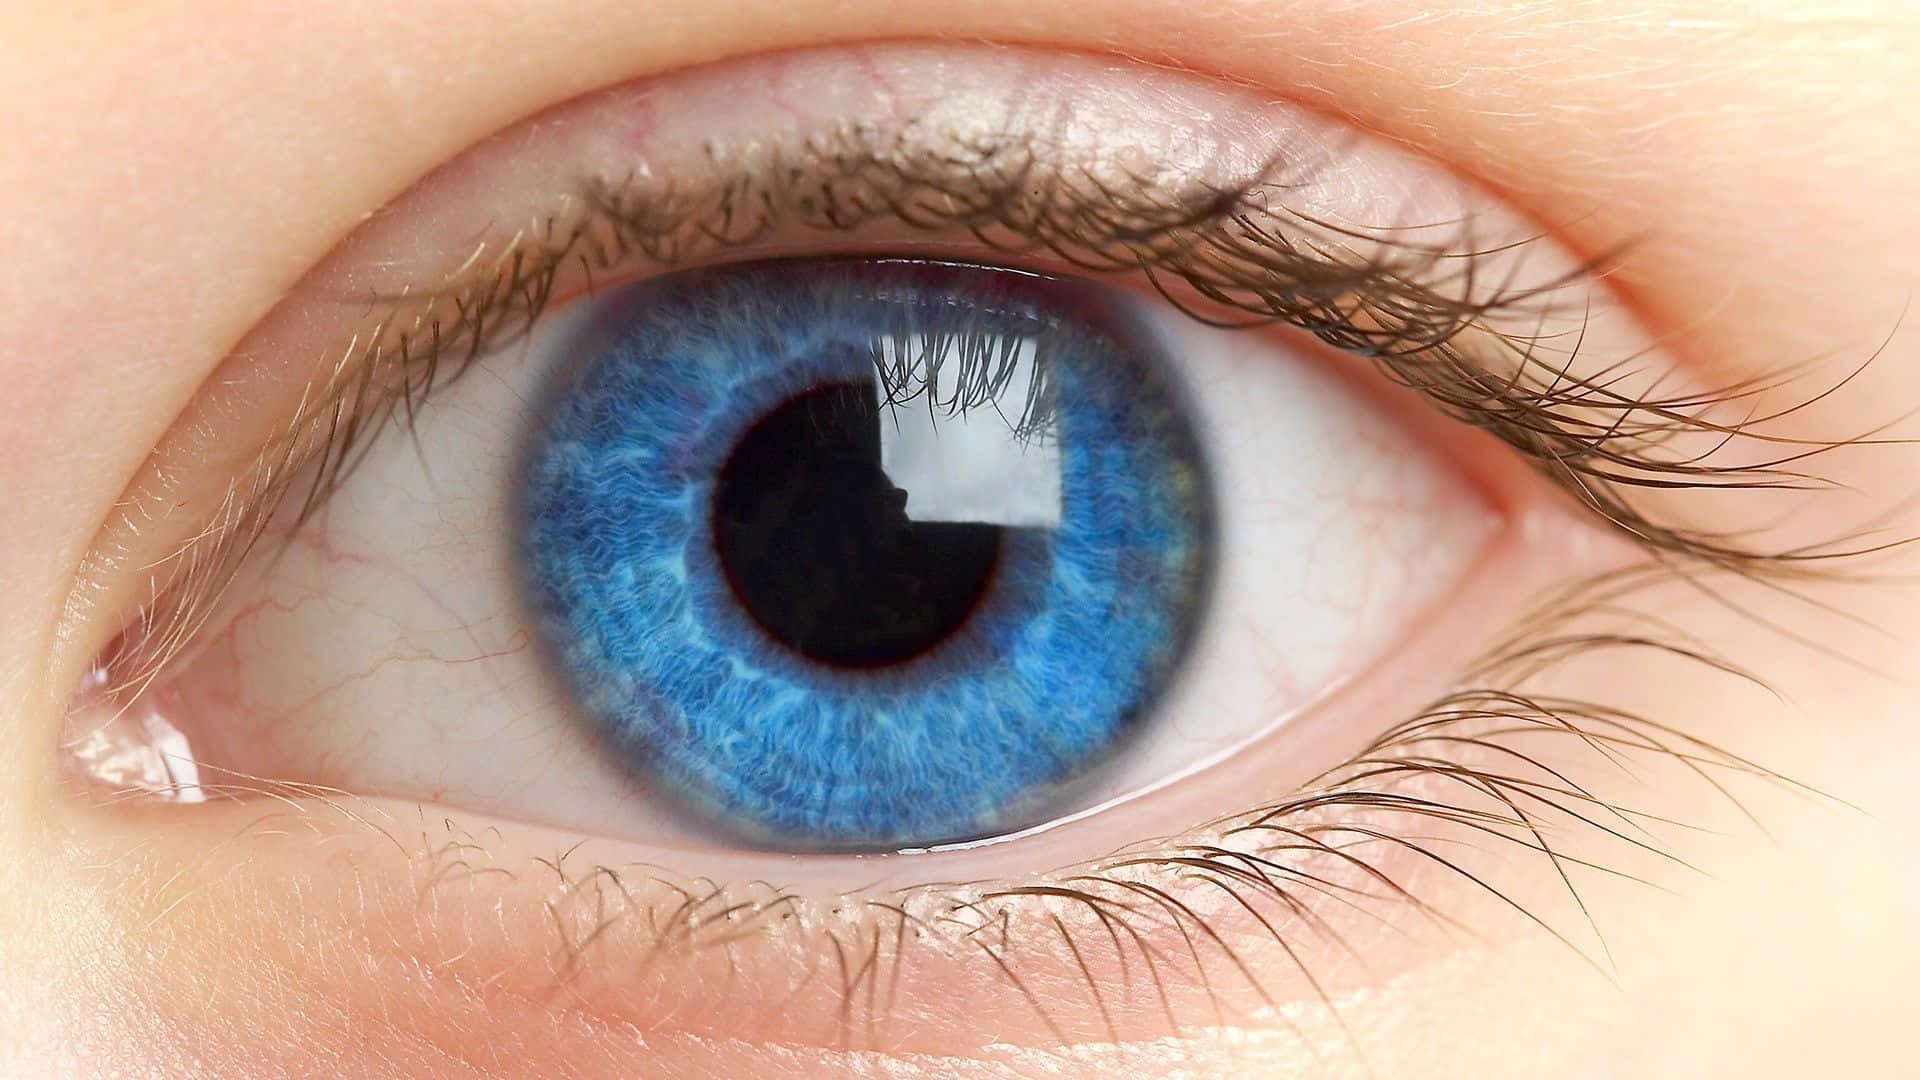 Captivating Stare: Intense Human Eyes Close-up